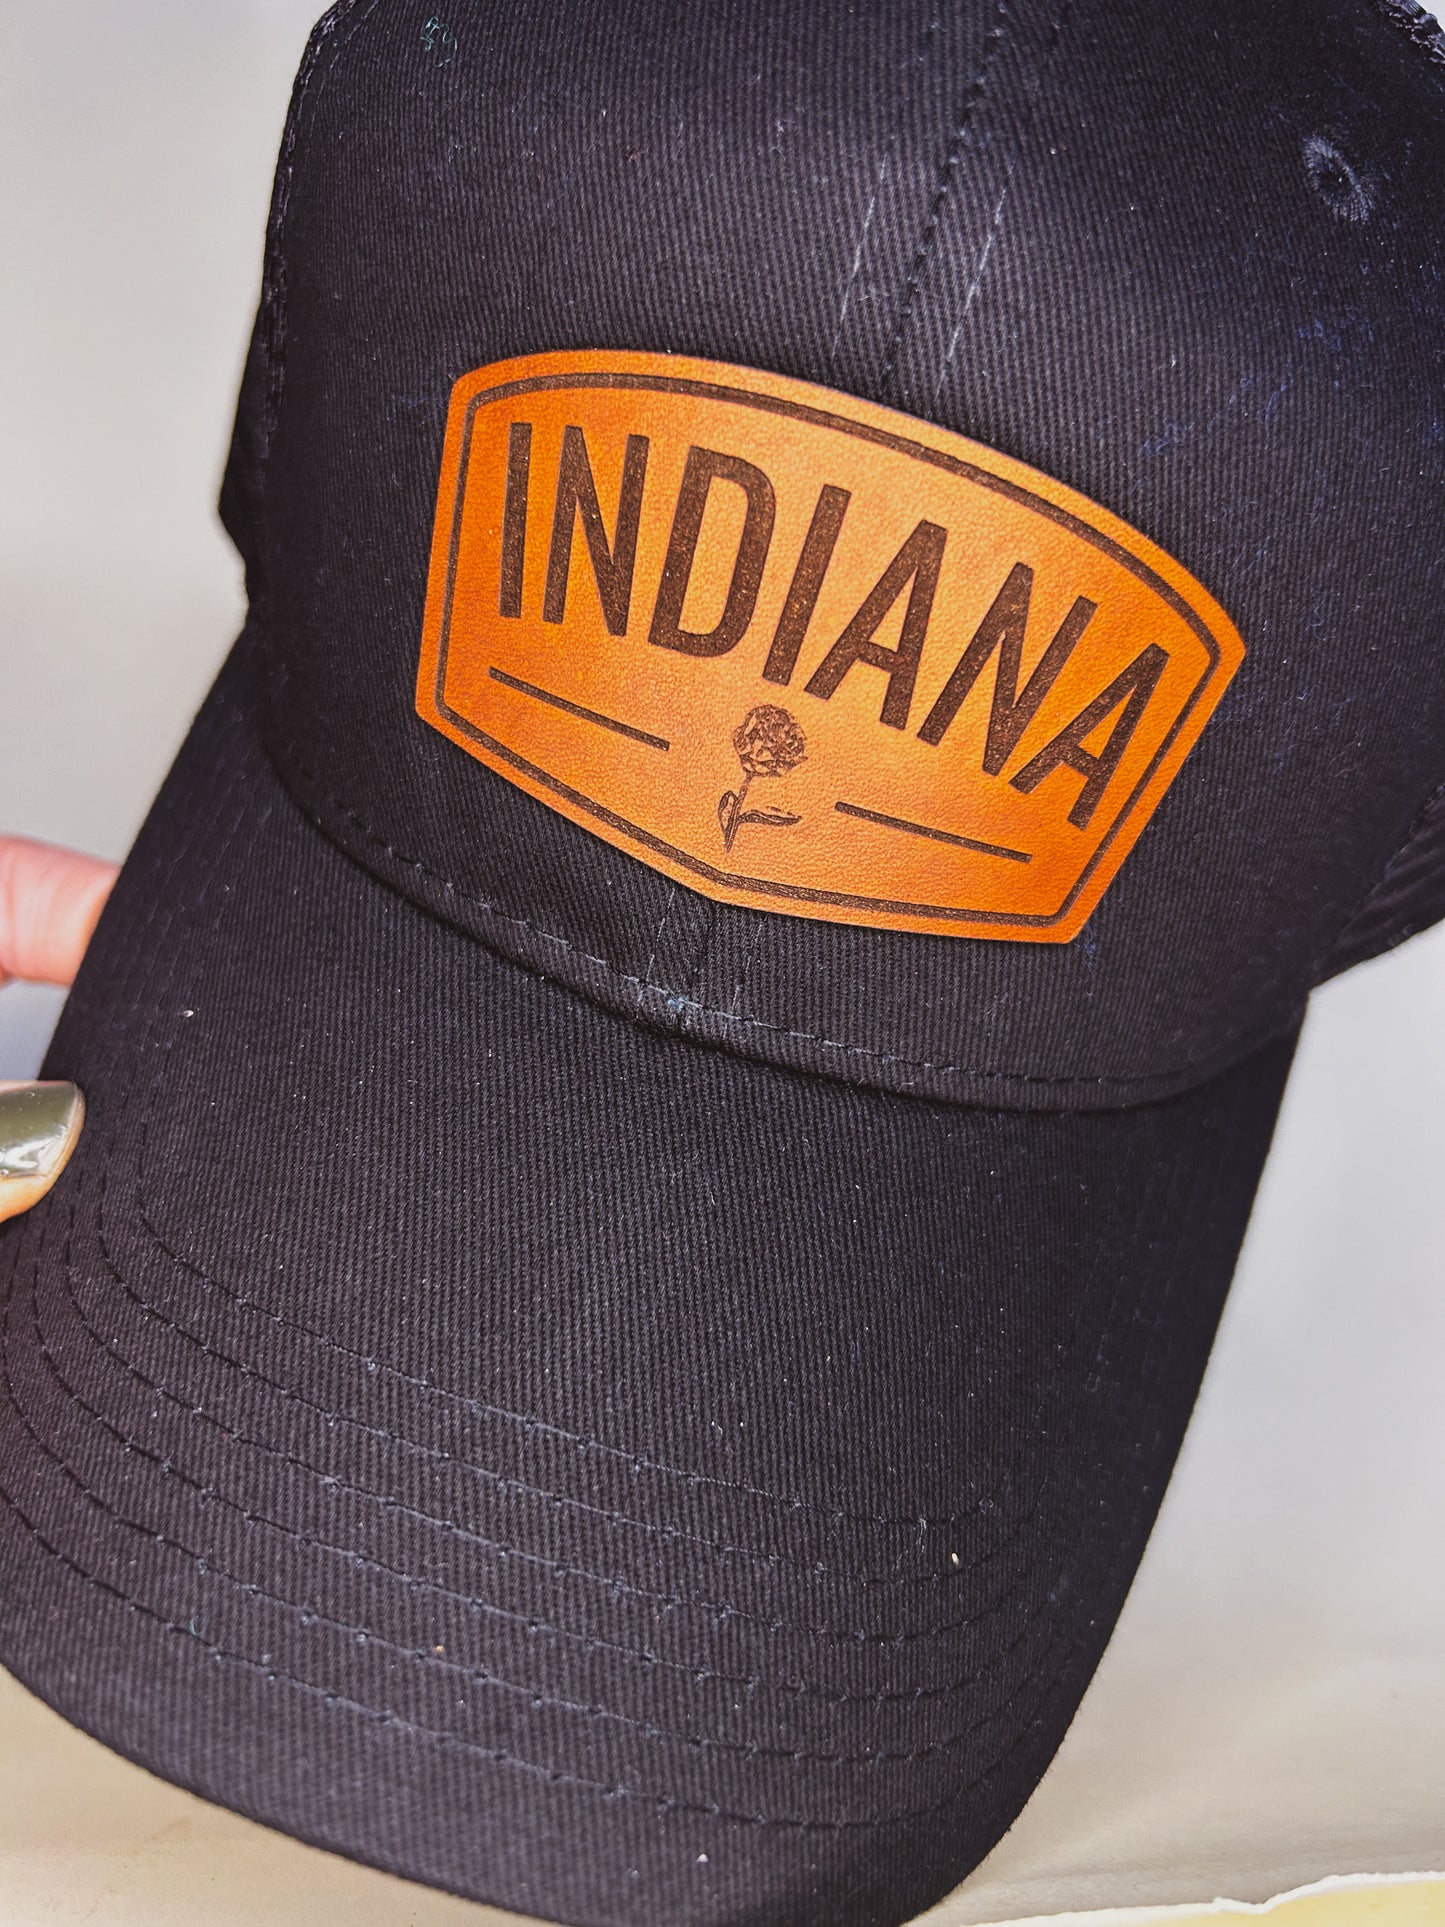 Indiana Peony Patch on Black Baseball Hat